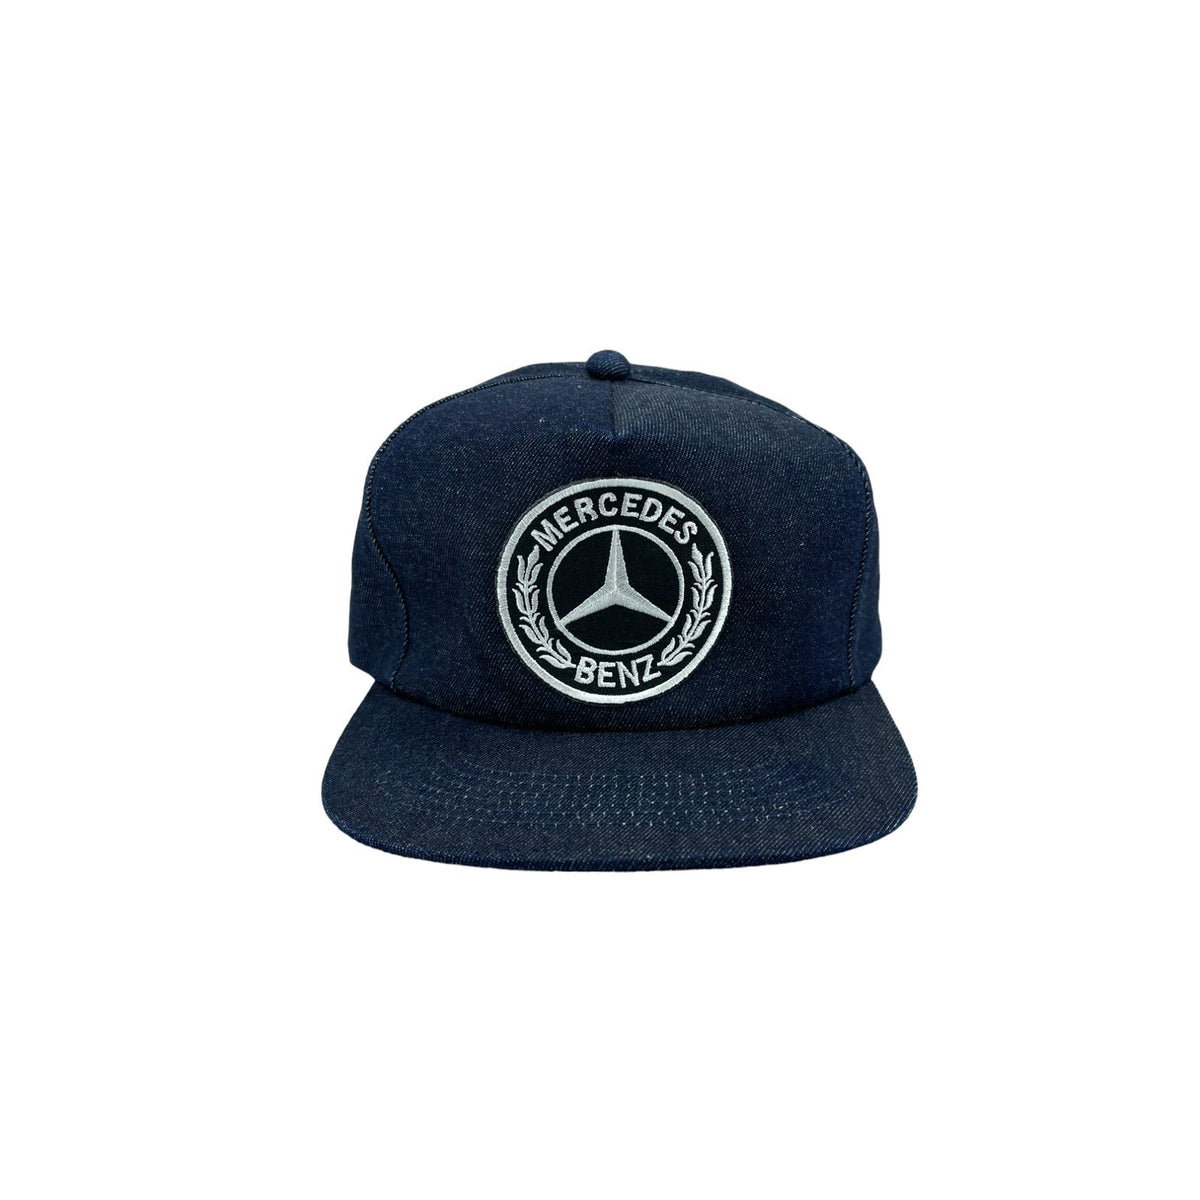 Vintage 1990's Mercedes Benz YoungAn Denim Snapback Hat